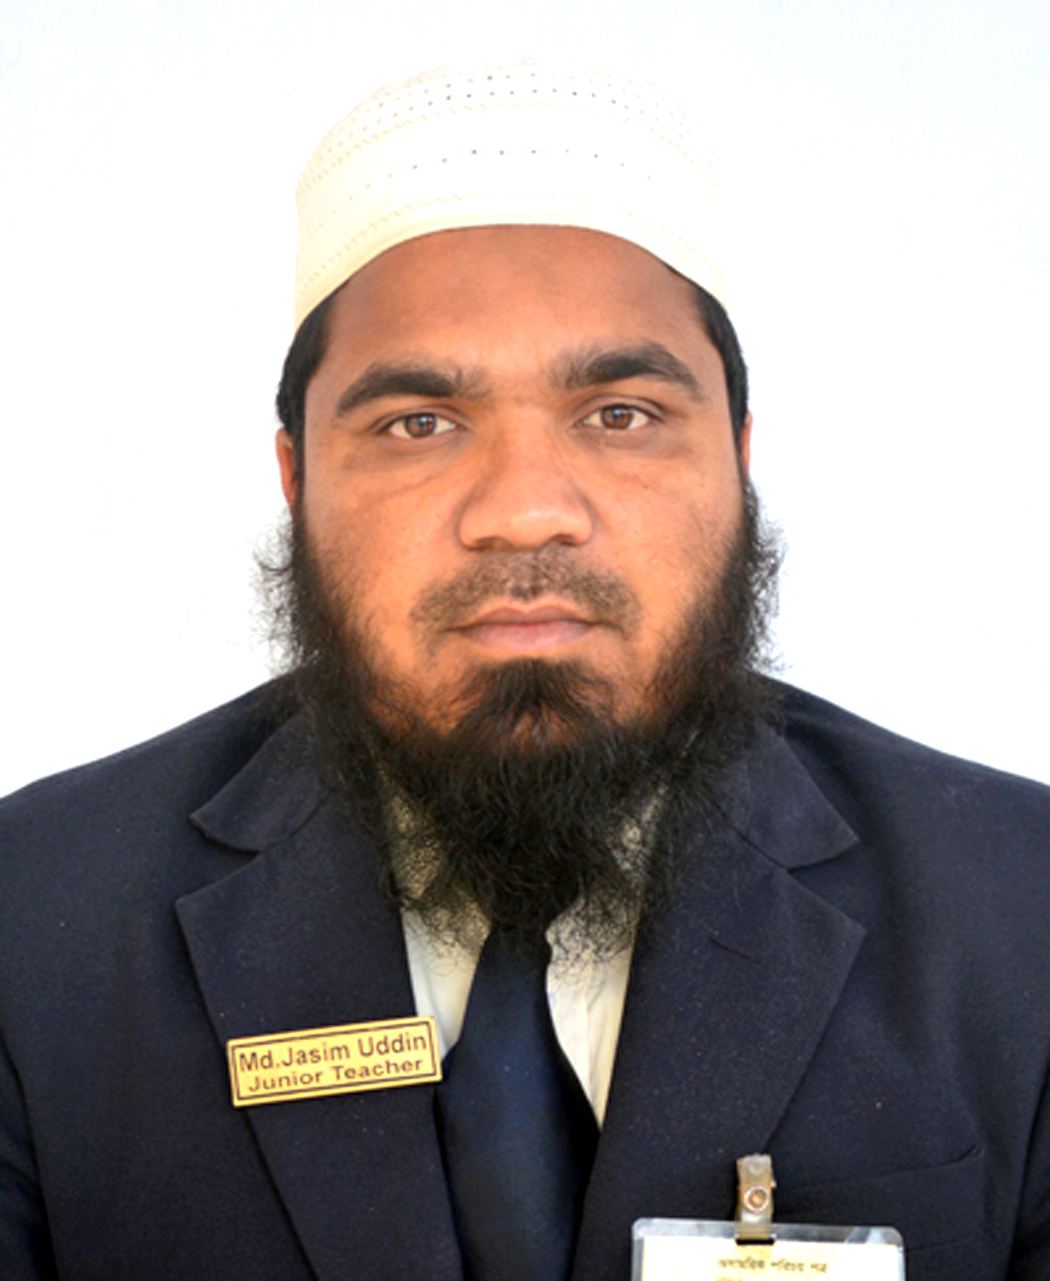 Mohammad Jasim Uddin 